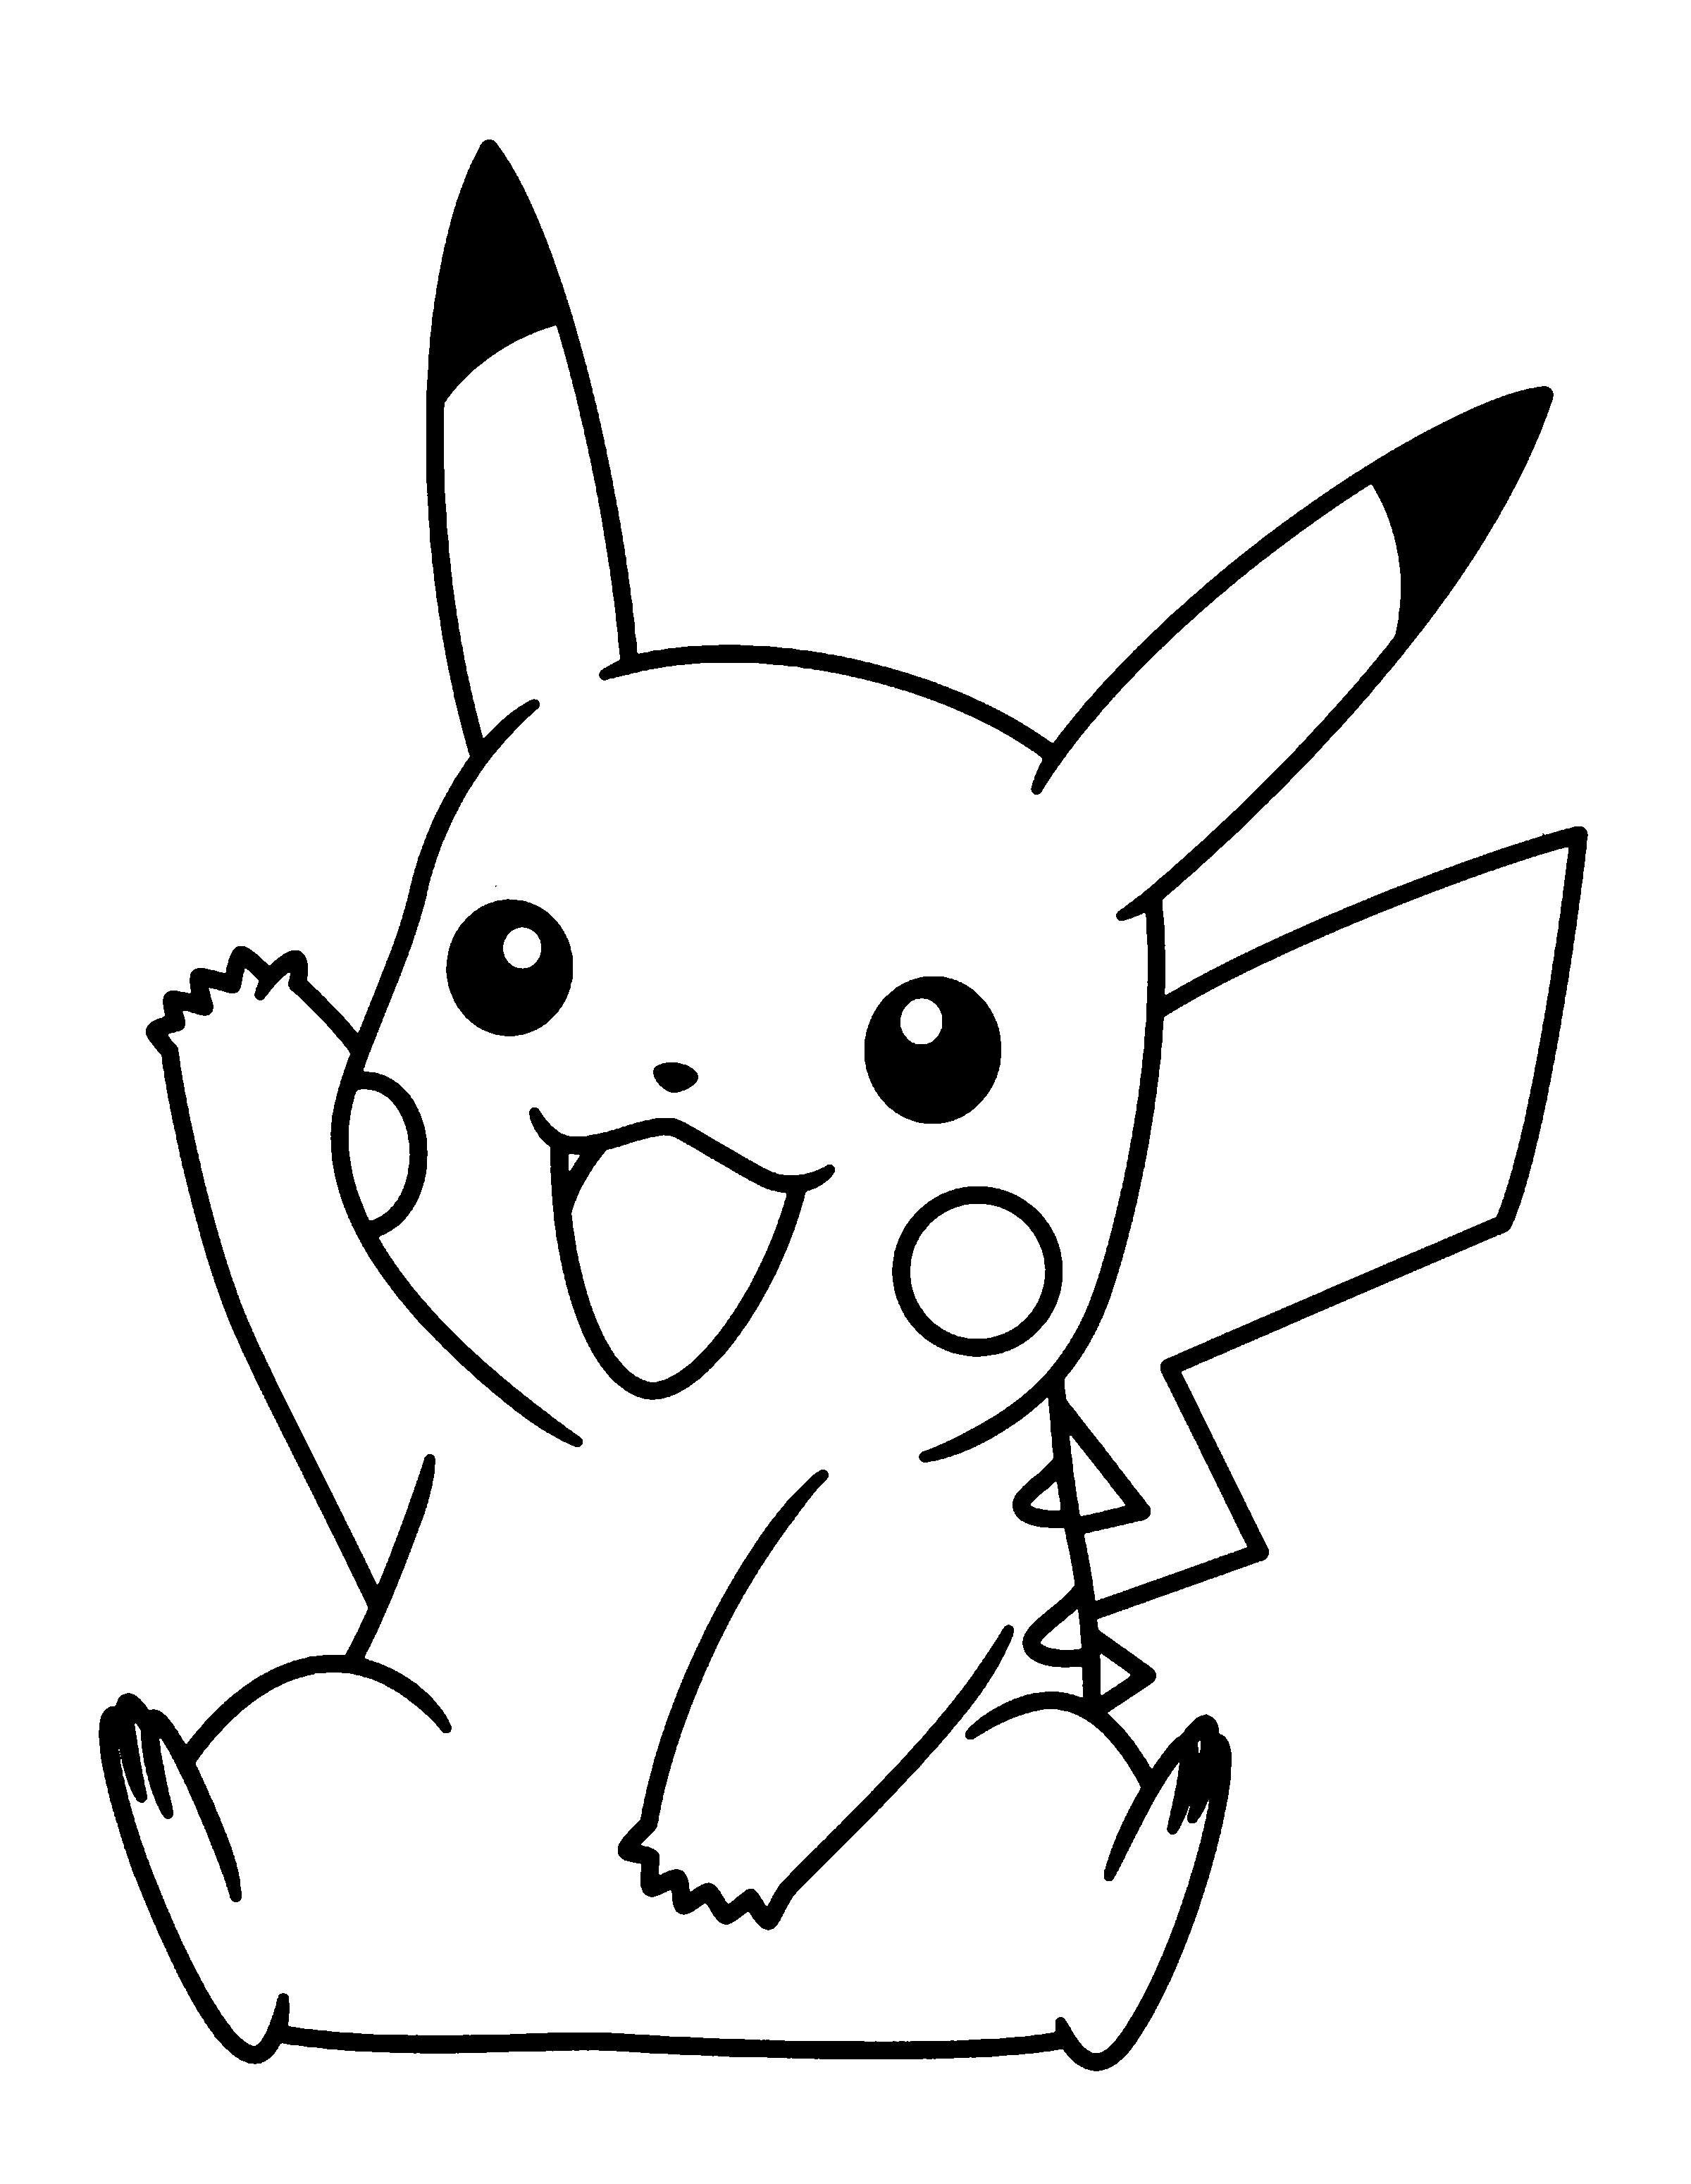 Pikachu cliparts